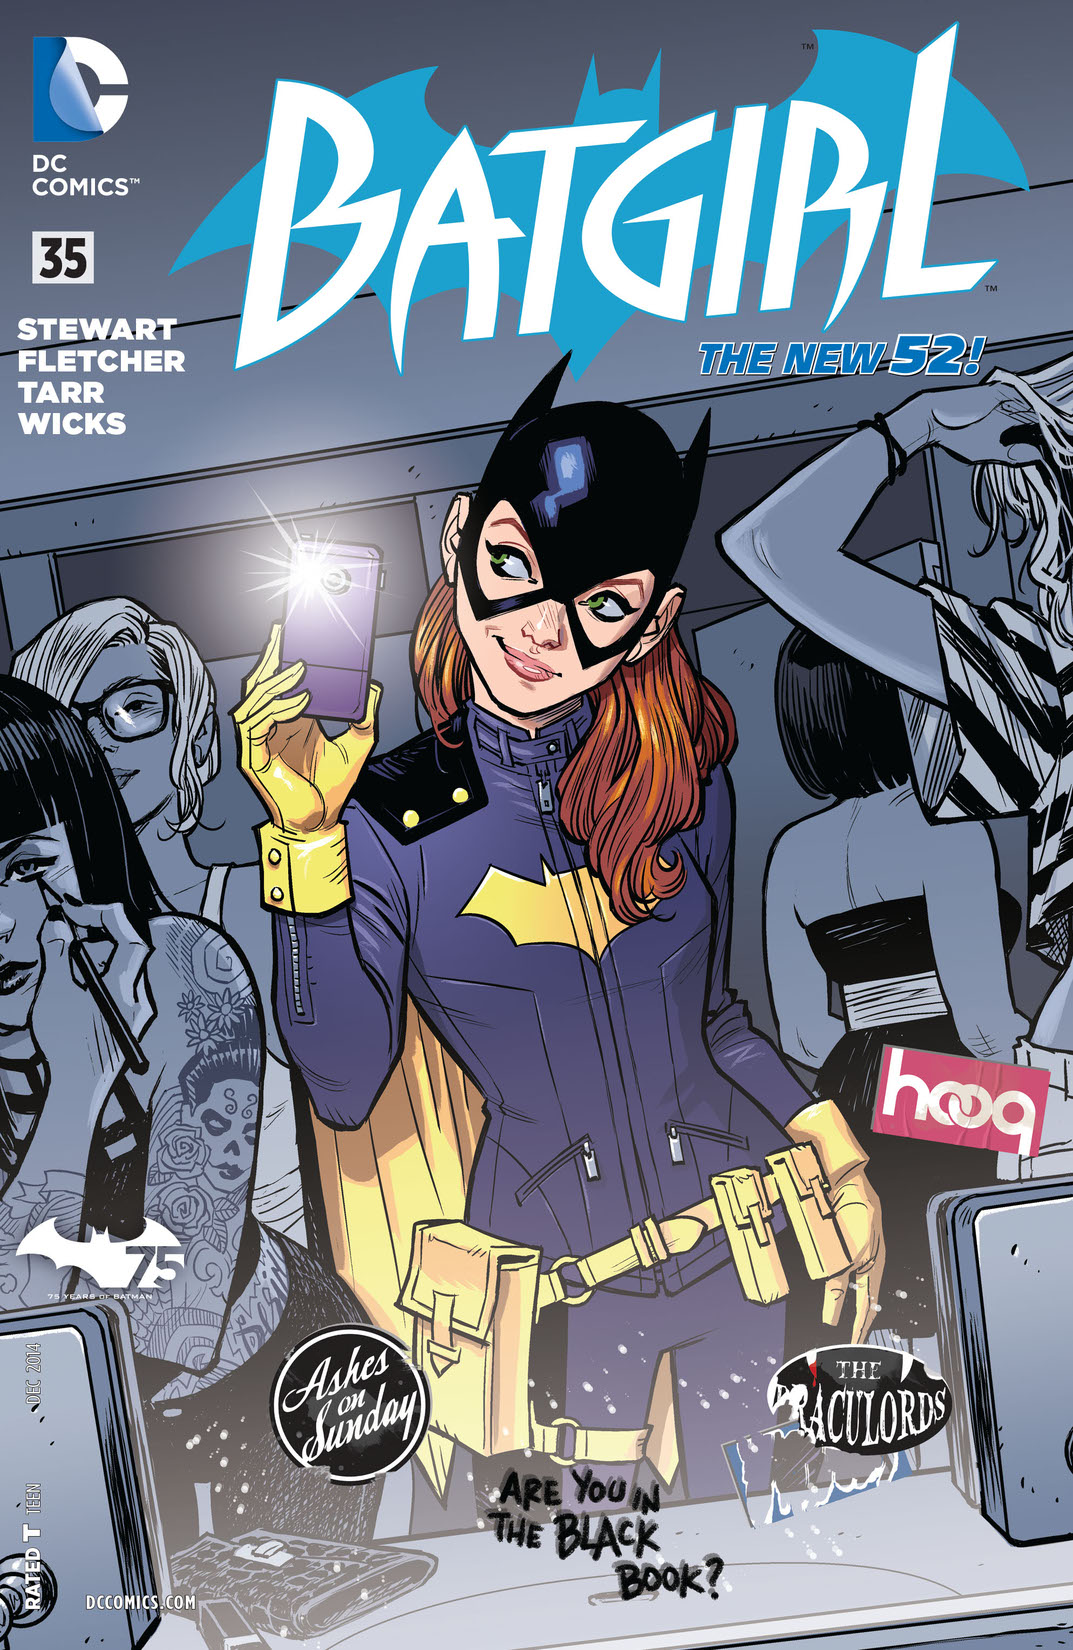 Batgirl (2011-) #35 preview images